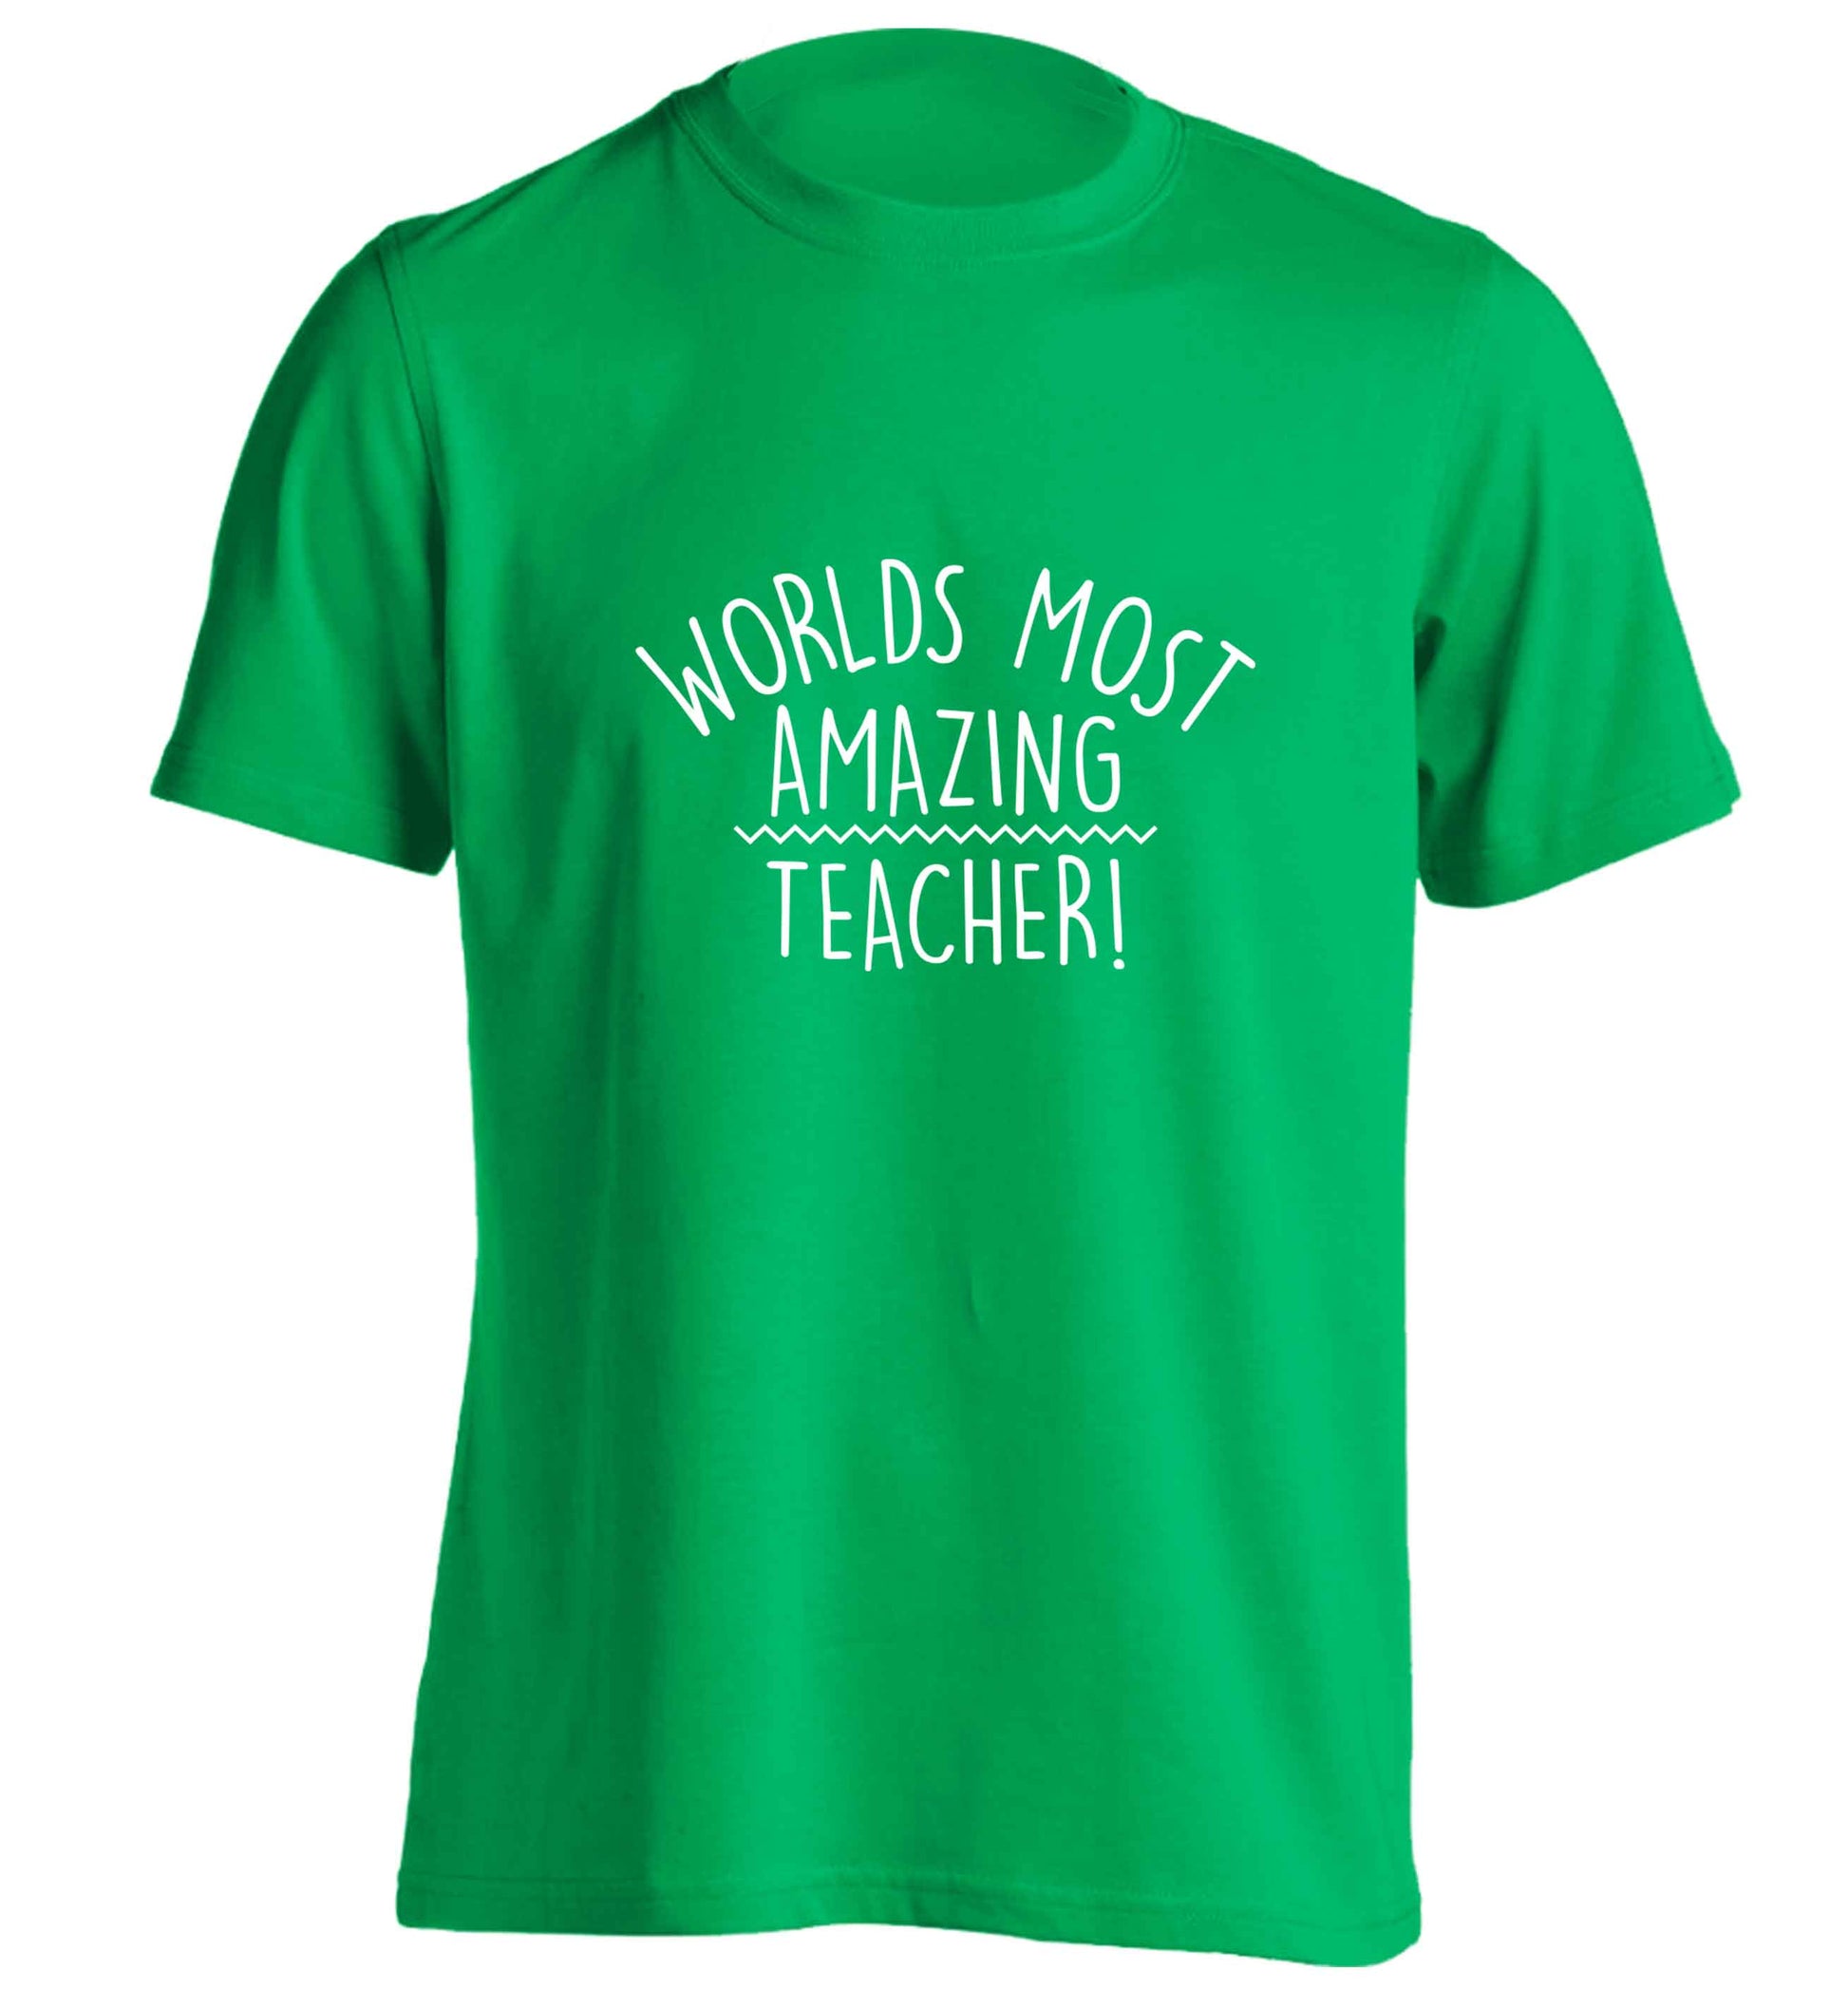 Worlds most amazing teacher adults unisex green Tshirt 2XL